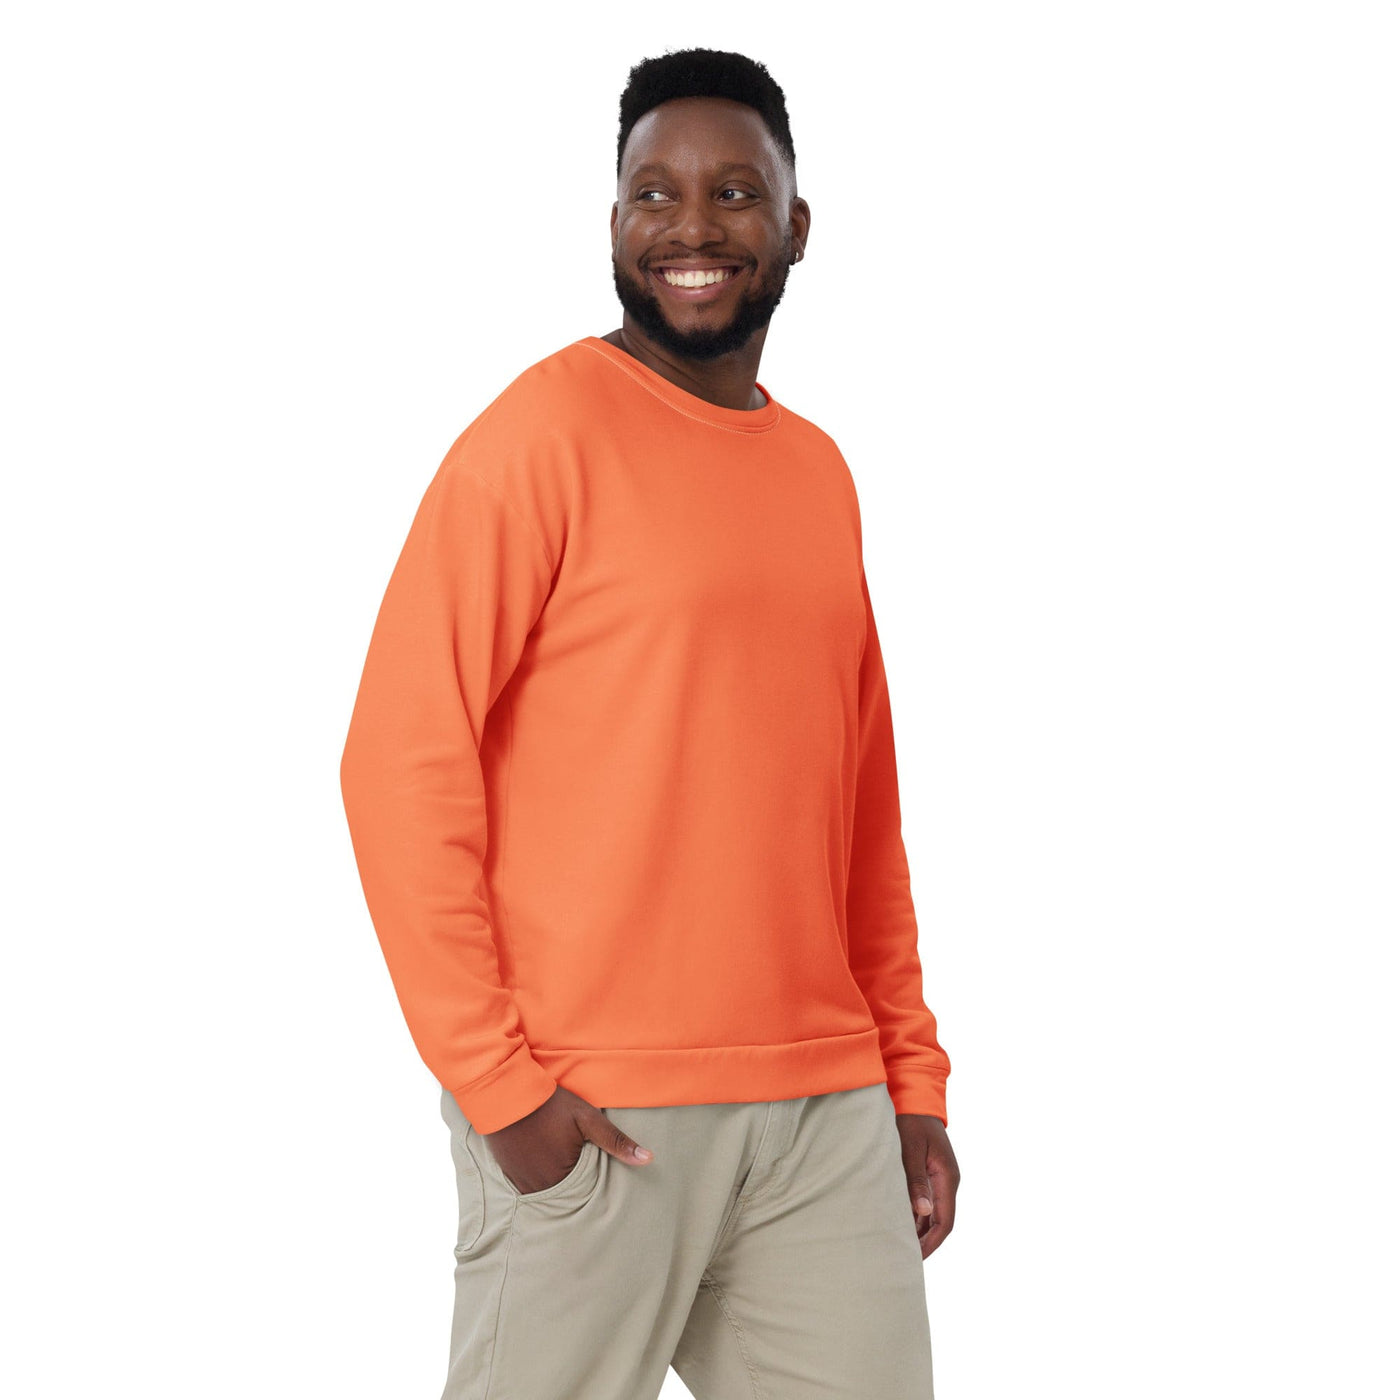 Graphic Sweatshirt For Men Coral Orange Red